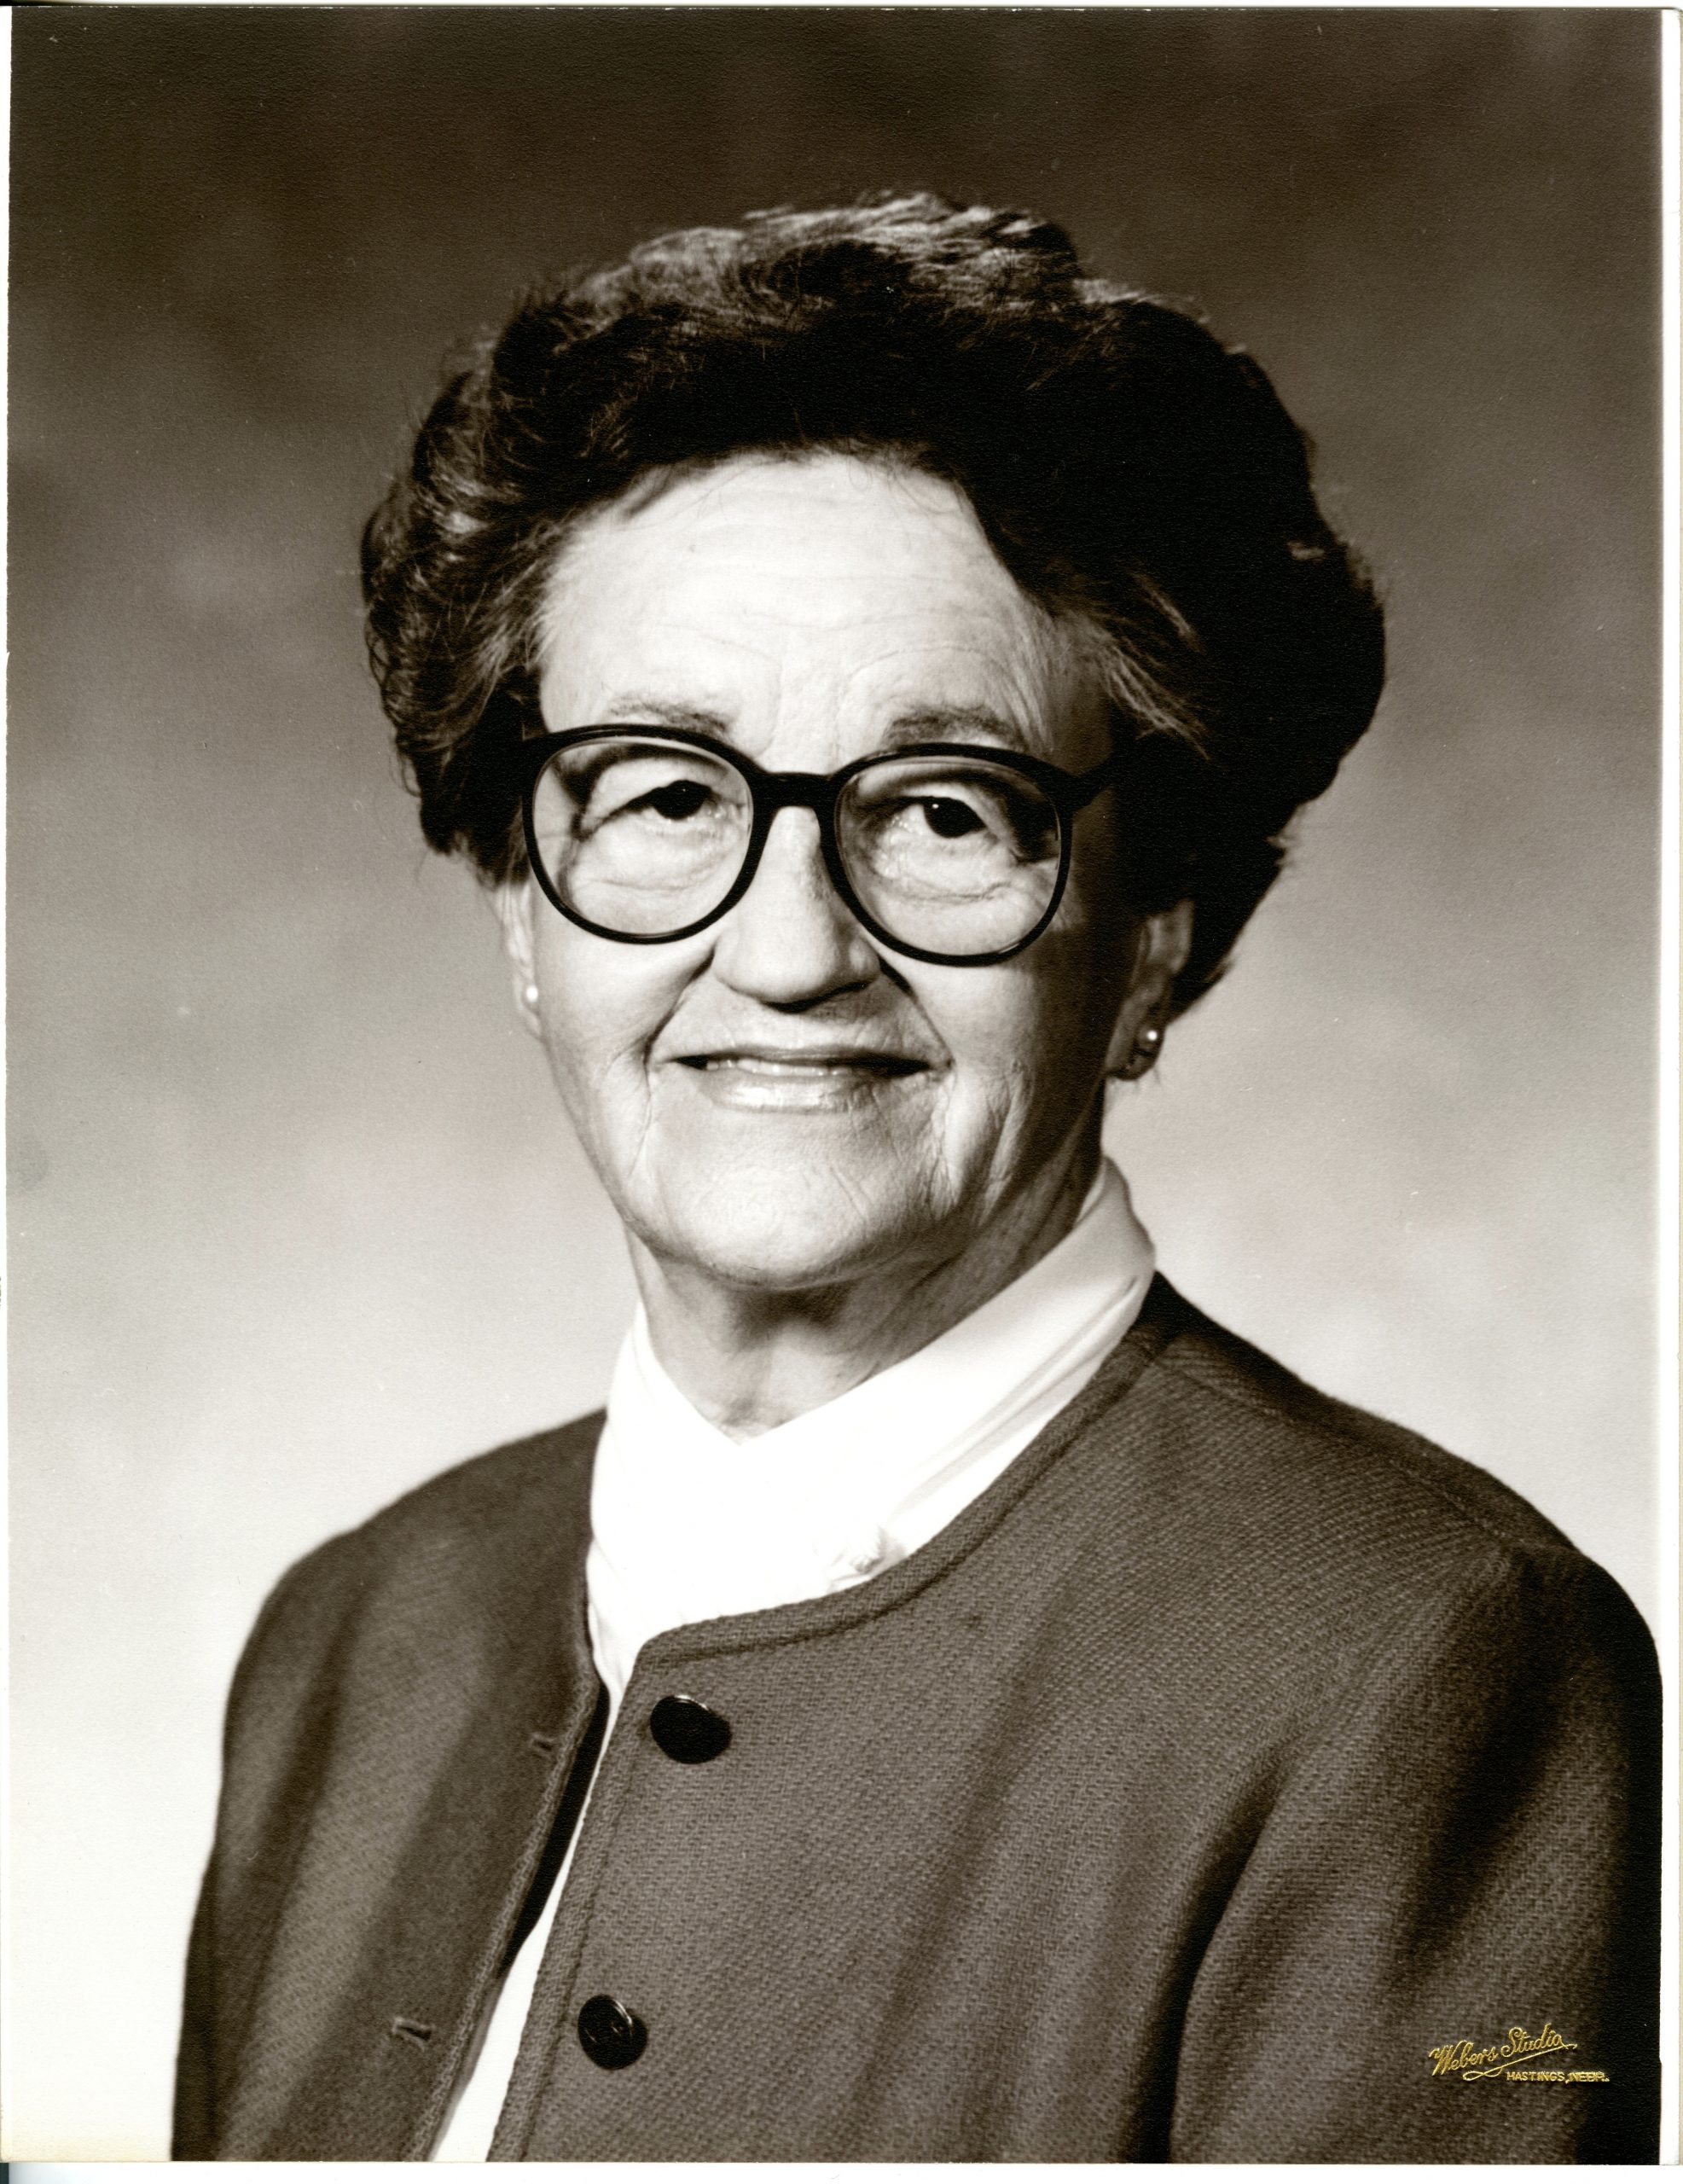 Phyllis Lainson as Mayor, 1989. Courtesy of Adams County Historical Society.